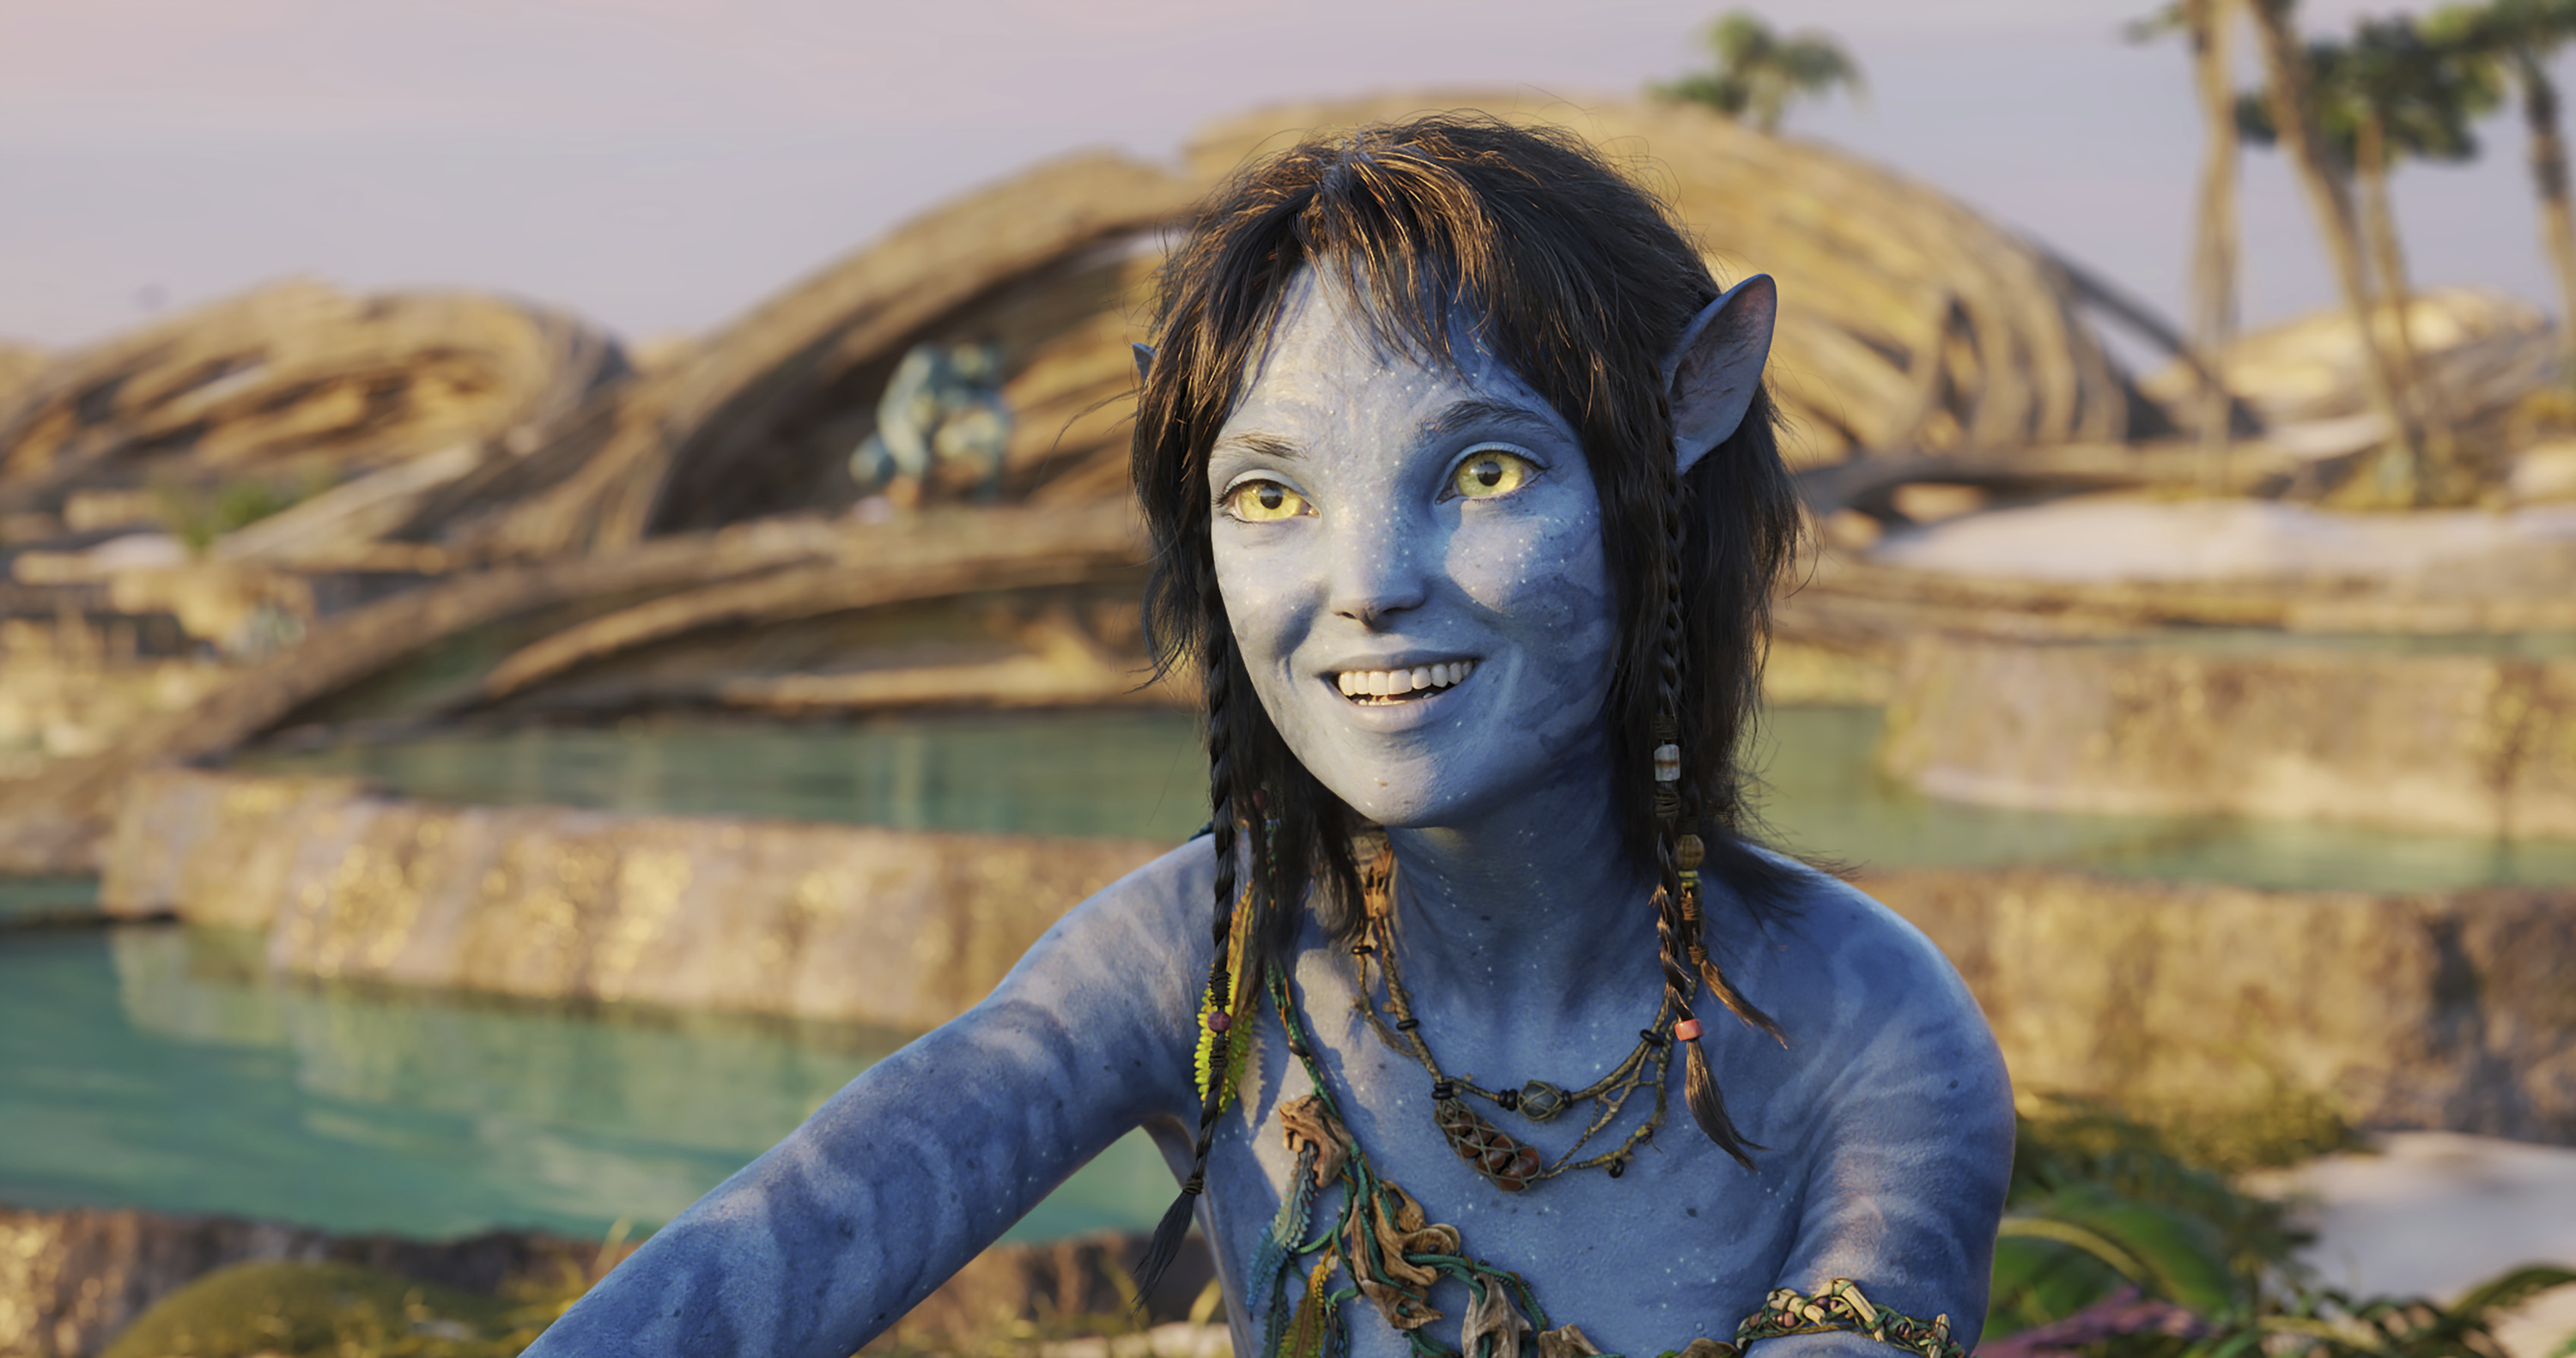 Fotogramas de la película Avatar, el sentido del agua.